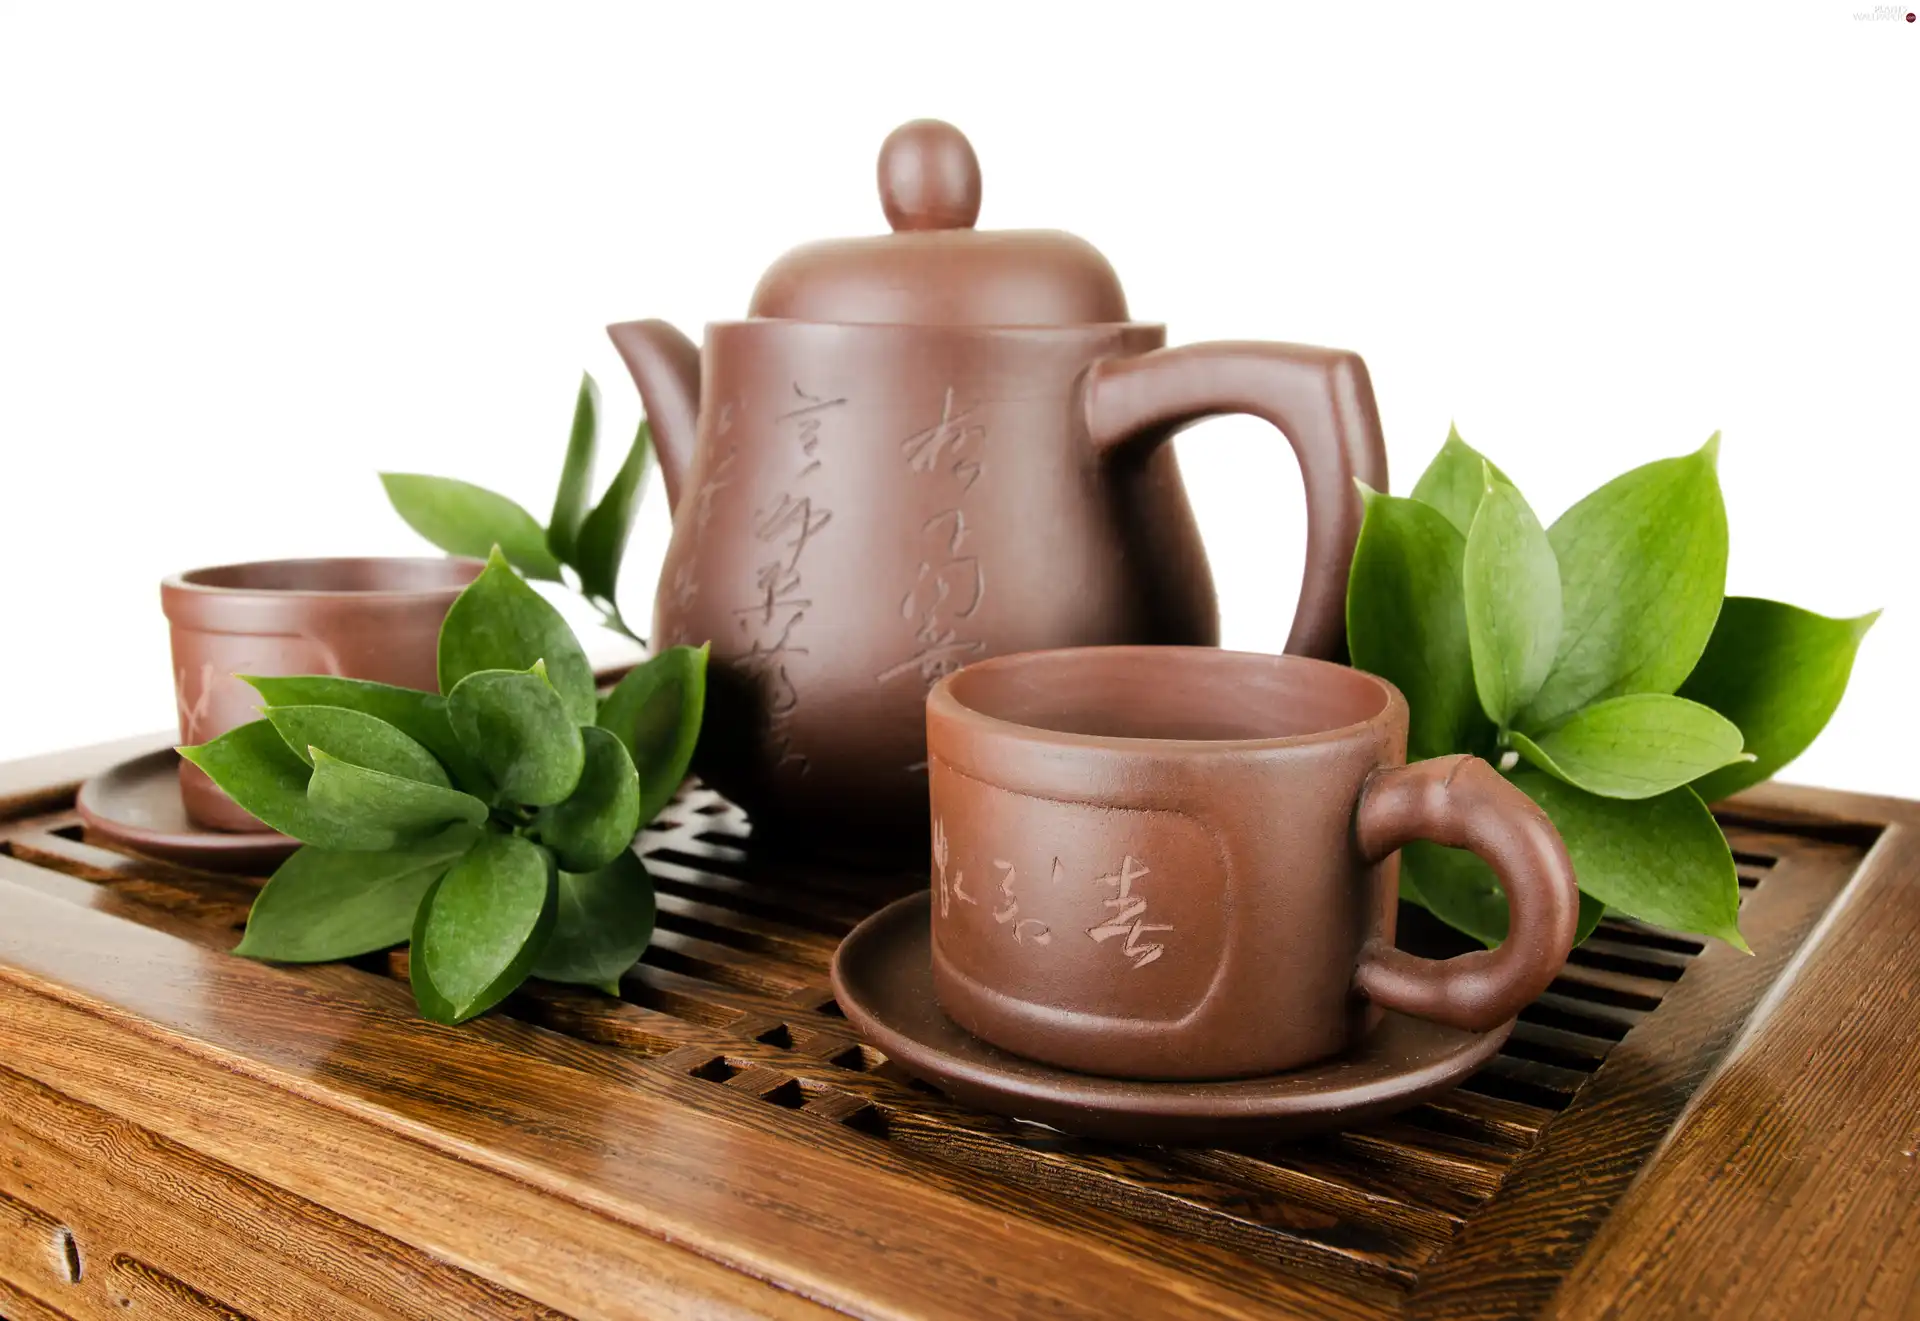 Leaf, tea, service, green ones, pottery